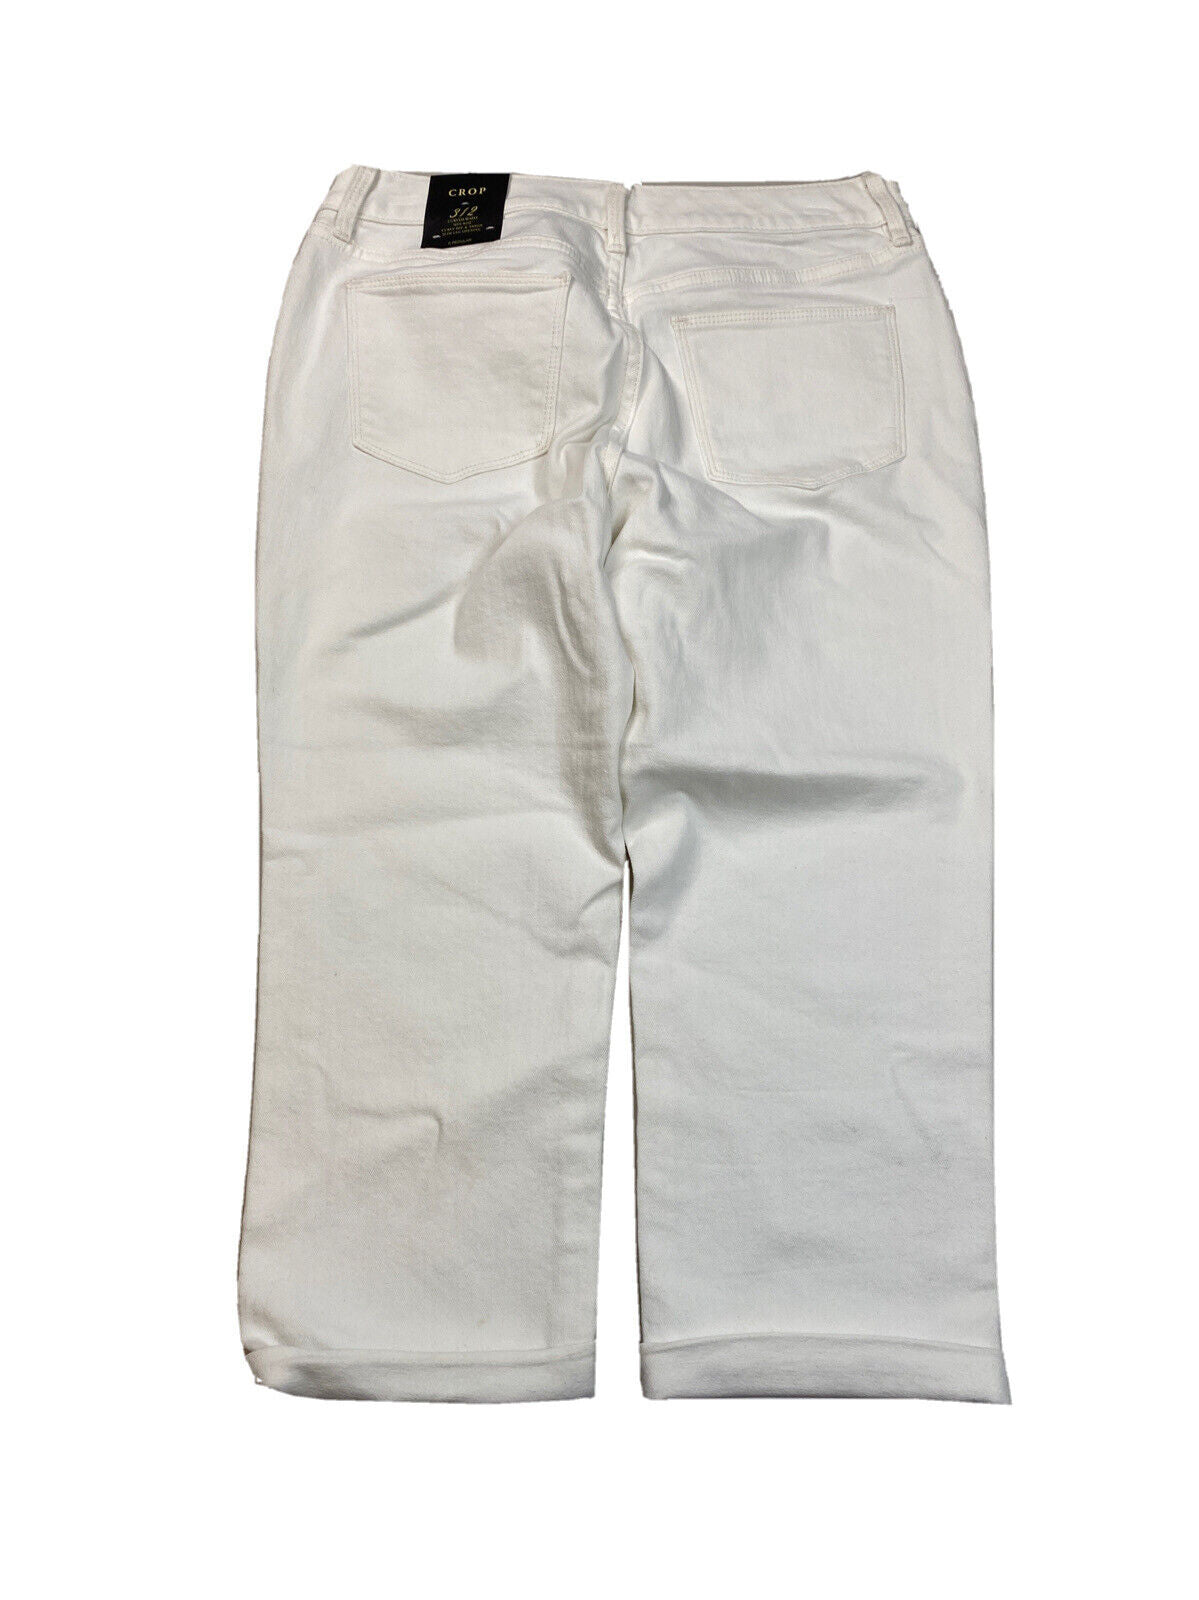 NEW The Limited Women's White Denim Slim Leg Crop 312 Jeans - 6